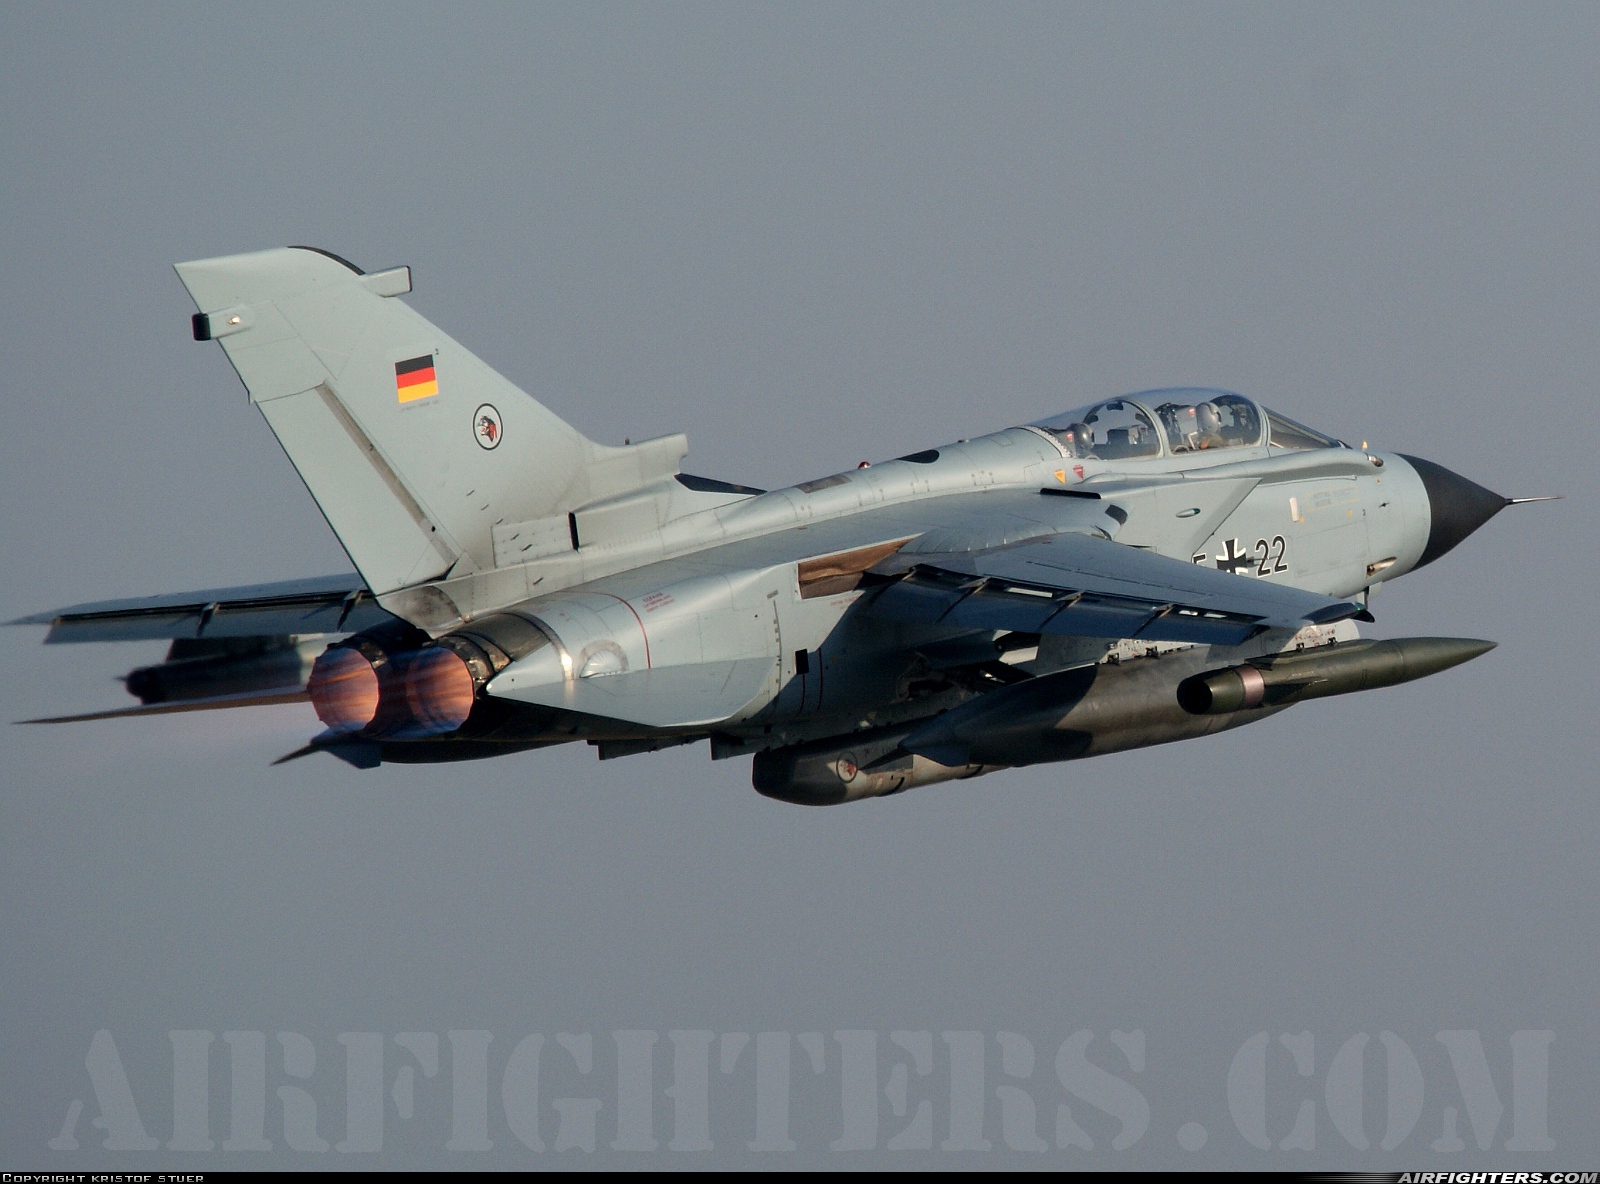 Germany - Air Force Panavia Tornado IDS 45+22 at Kleine Brogel (EBBL), Belgium